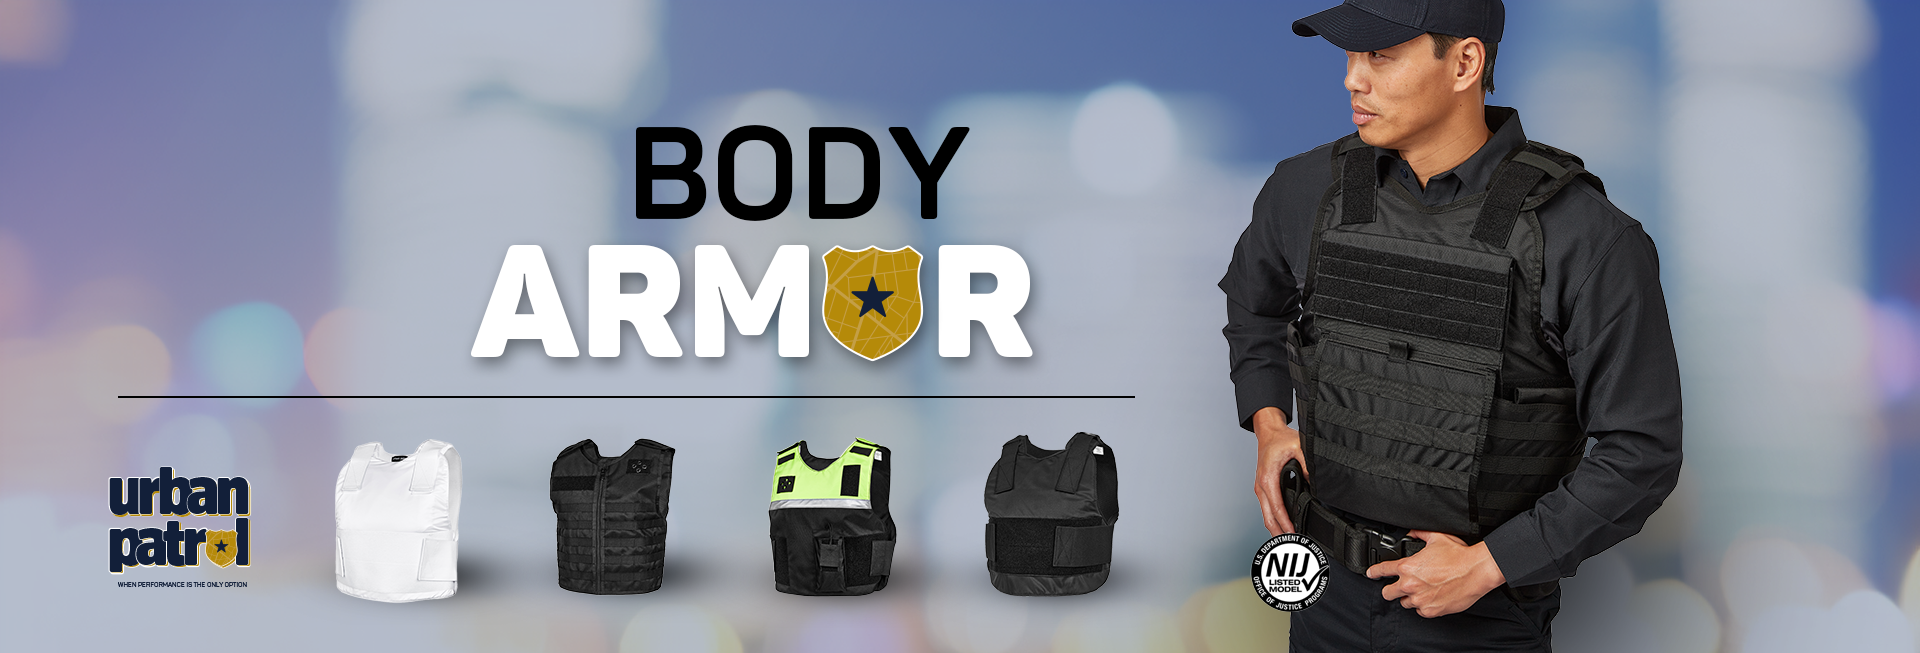 Body Armour, Balistic Vest,Bulletproof Vest,Tactical Vest,Armored Vest,Level II Armor,Level III Armor